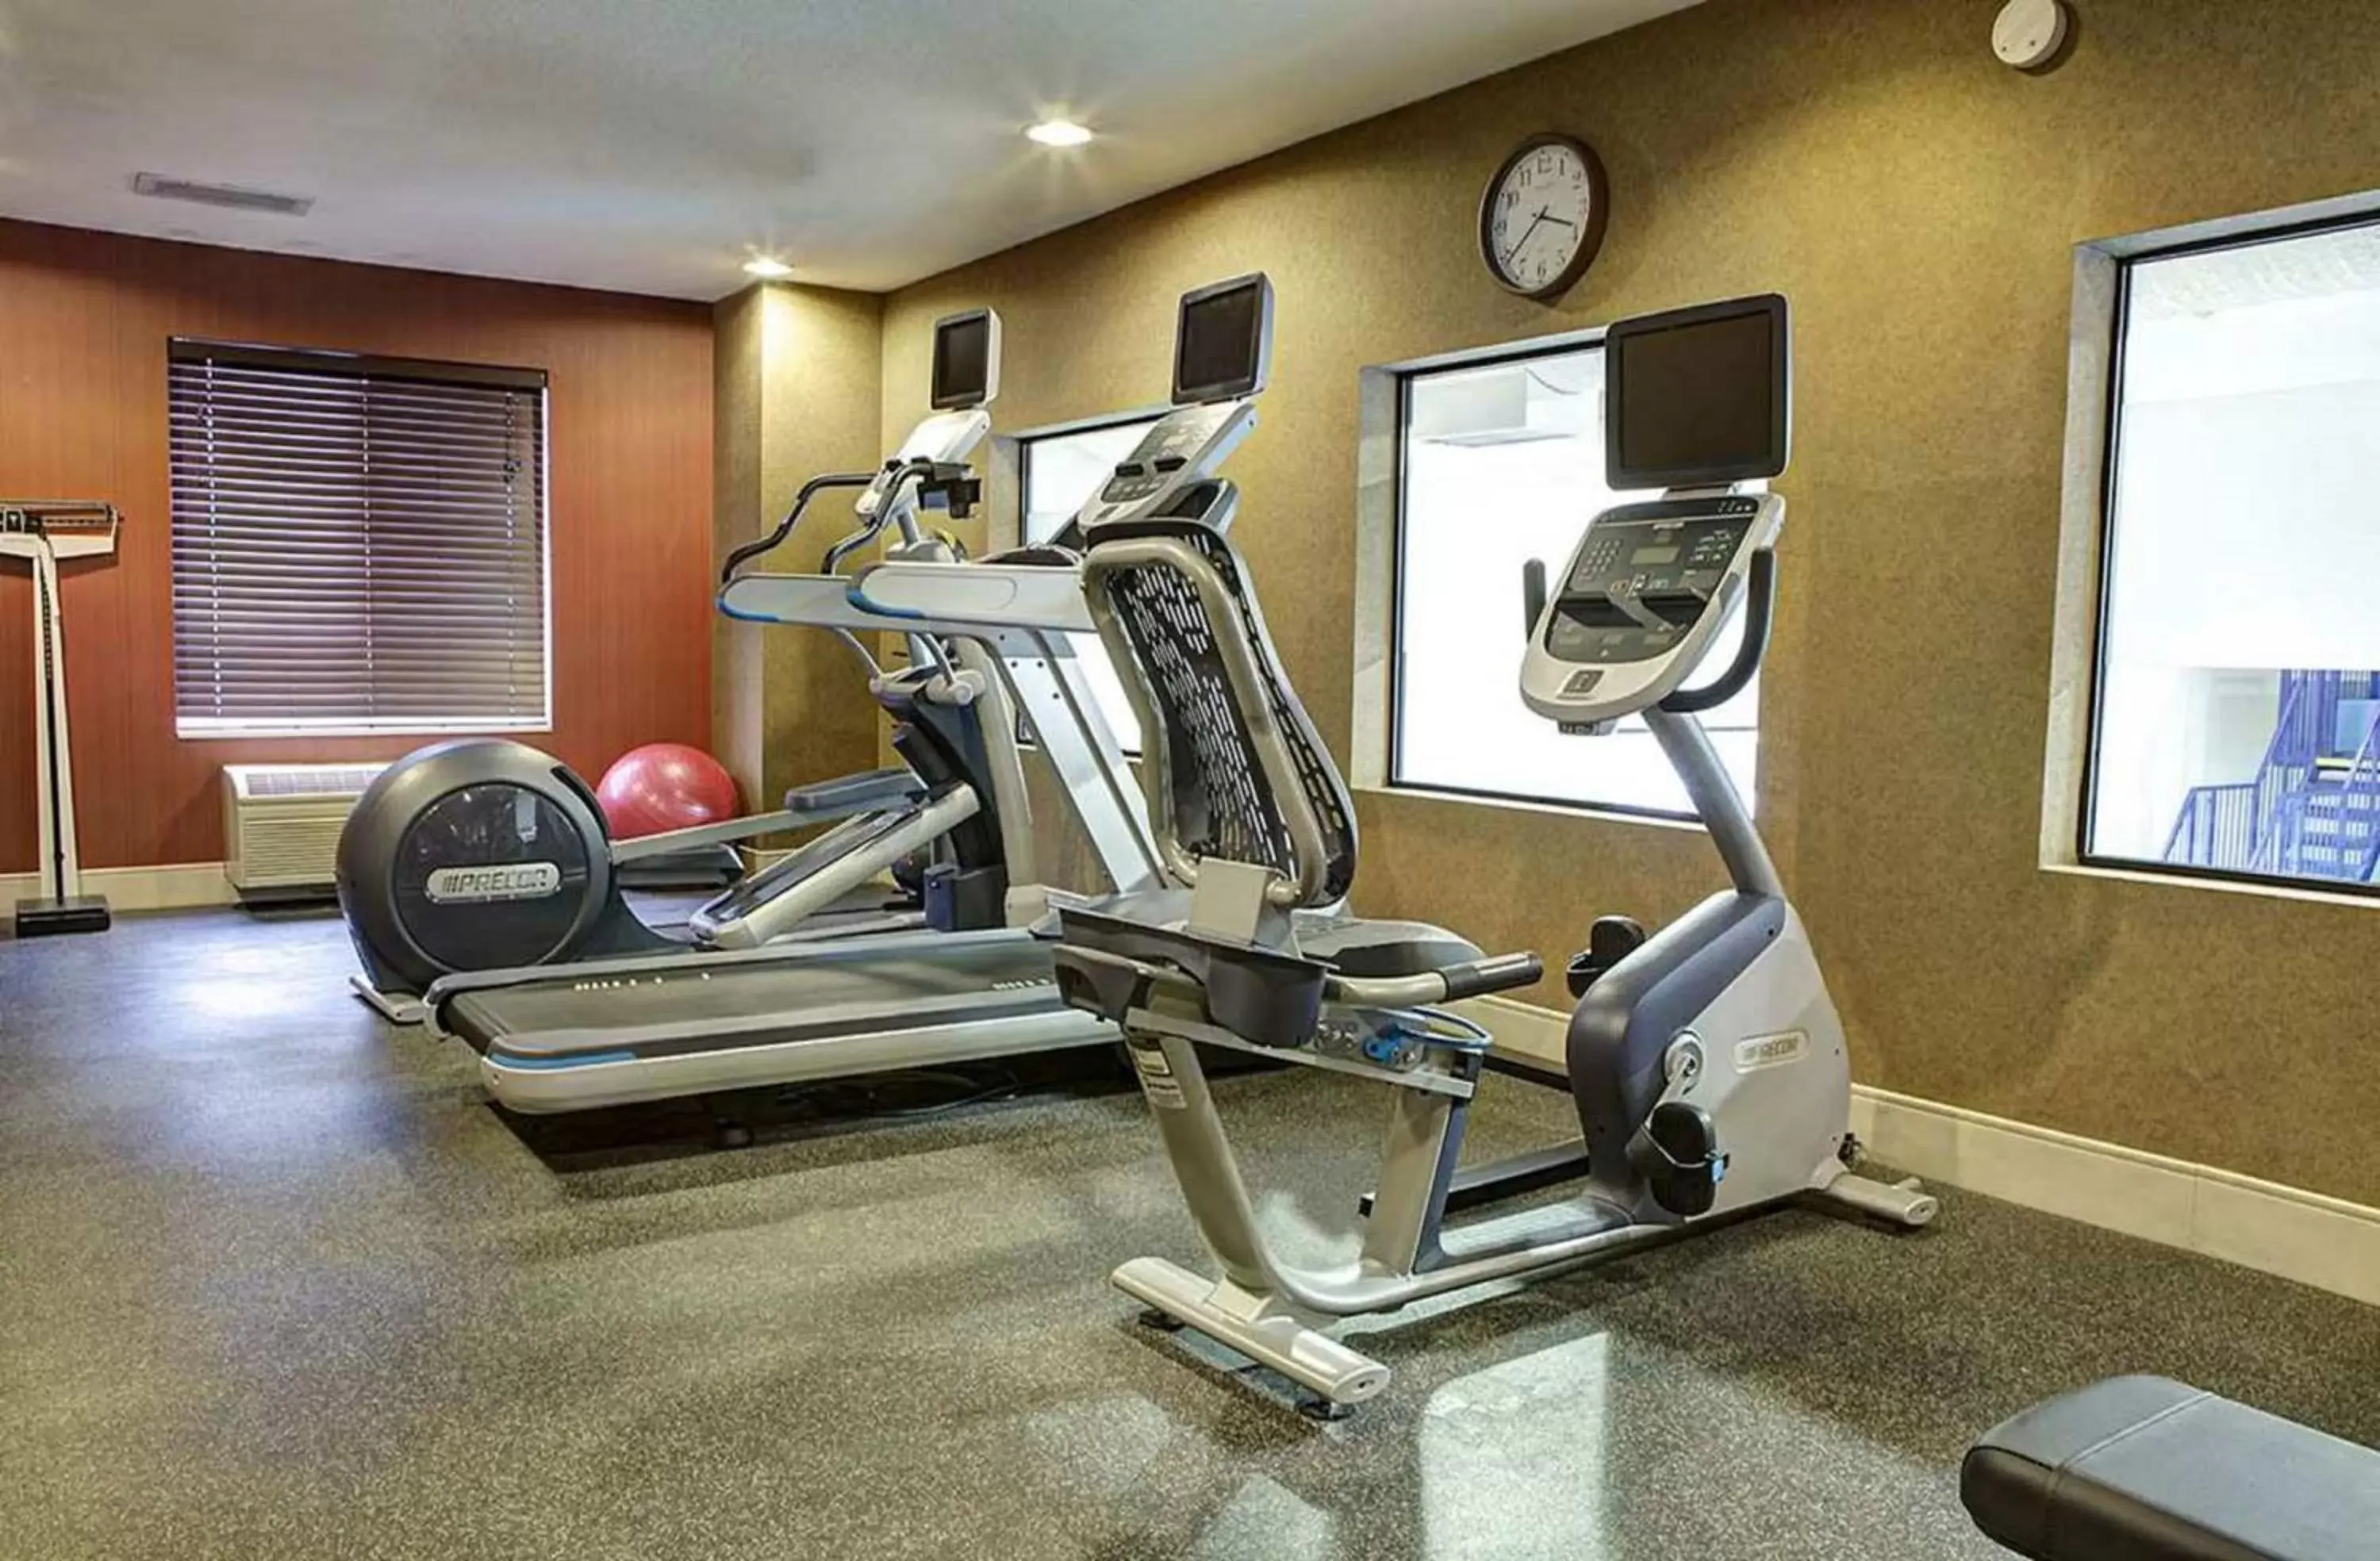 Fitness centre/facilities in Comfort Inn & Suites Rapid City near Mt Rushmore